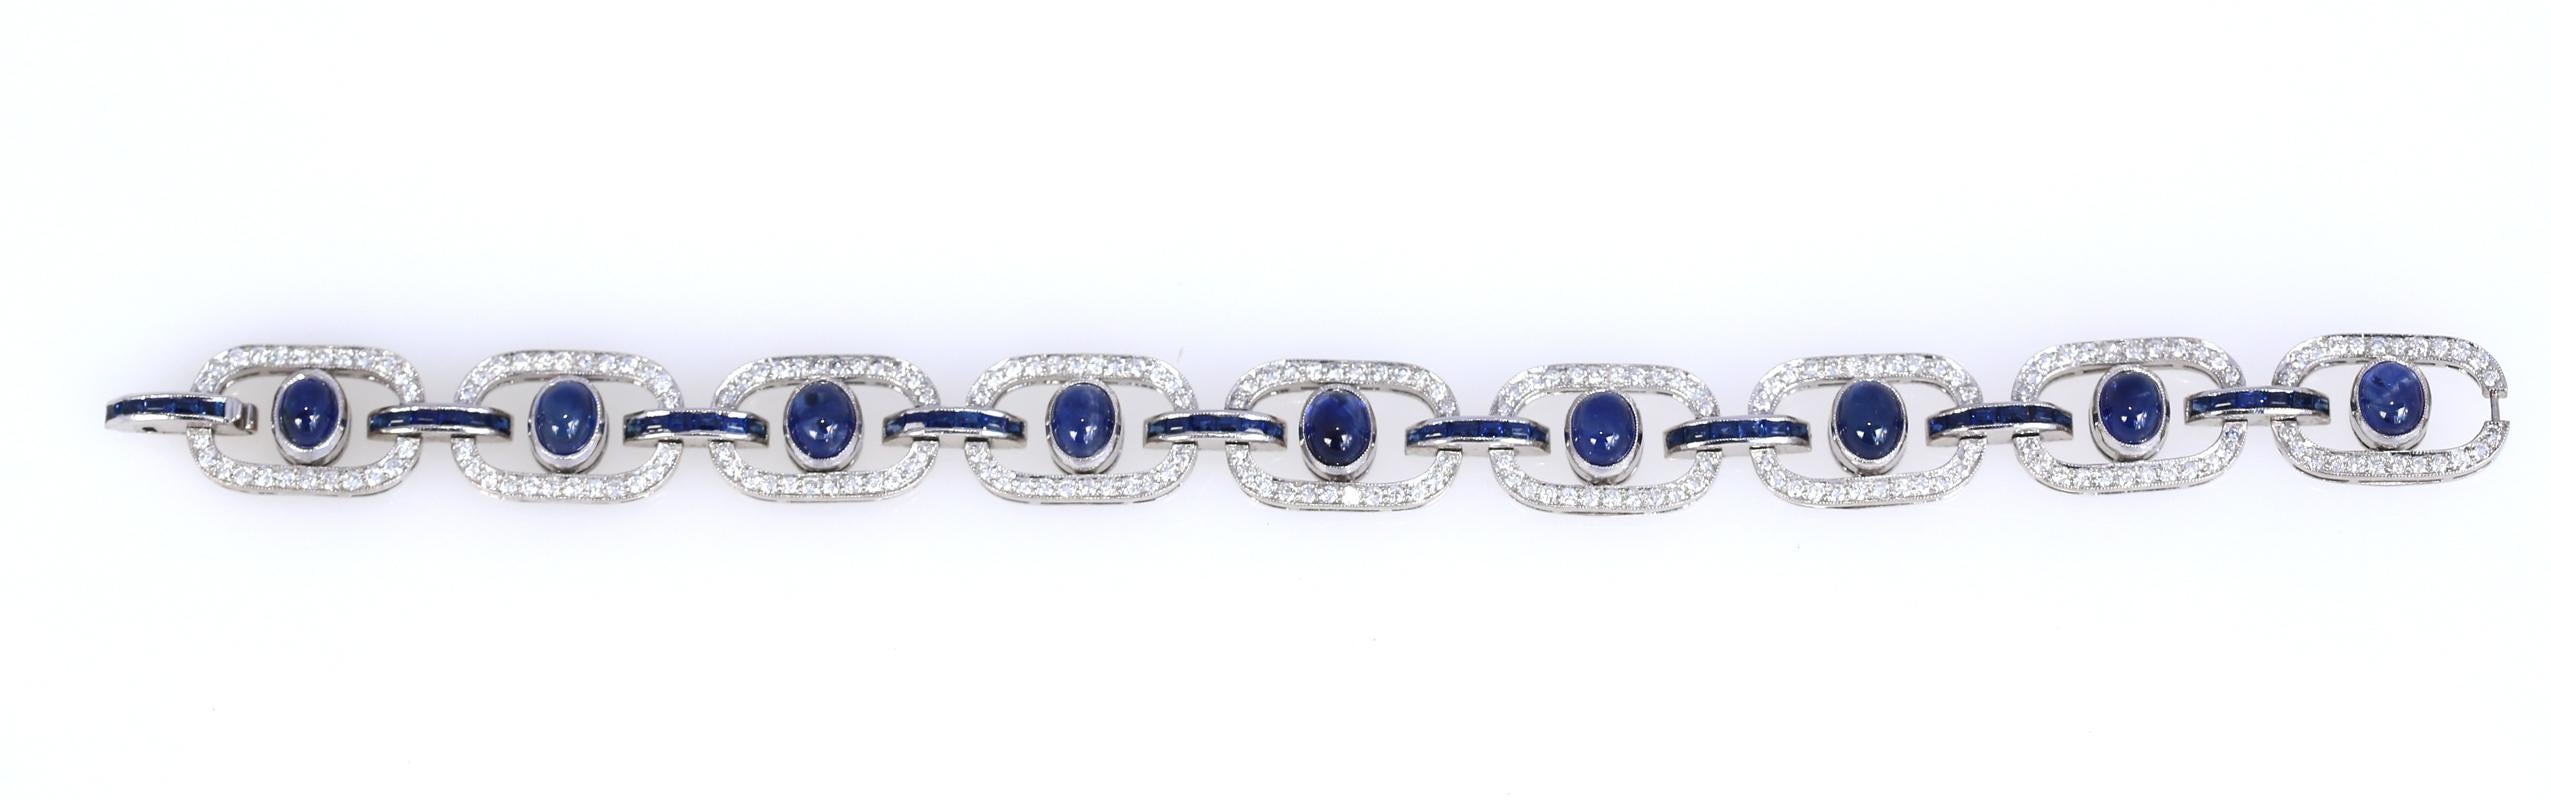 3 Bracelets Set Sapphires Rubies Diamonds Emeralds Necklace Сhoker White Gold For Sale 14